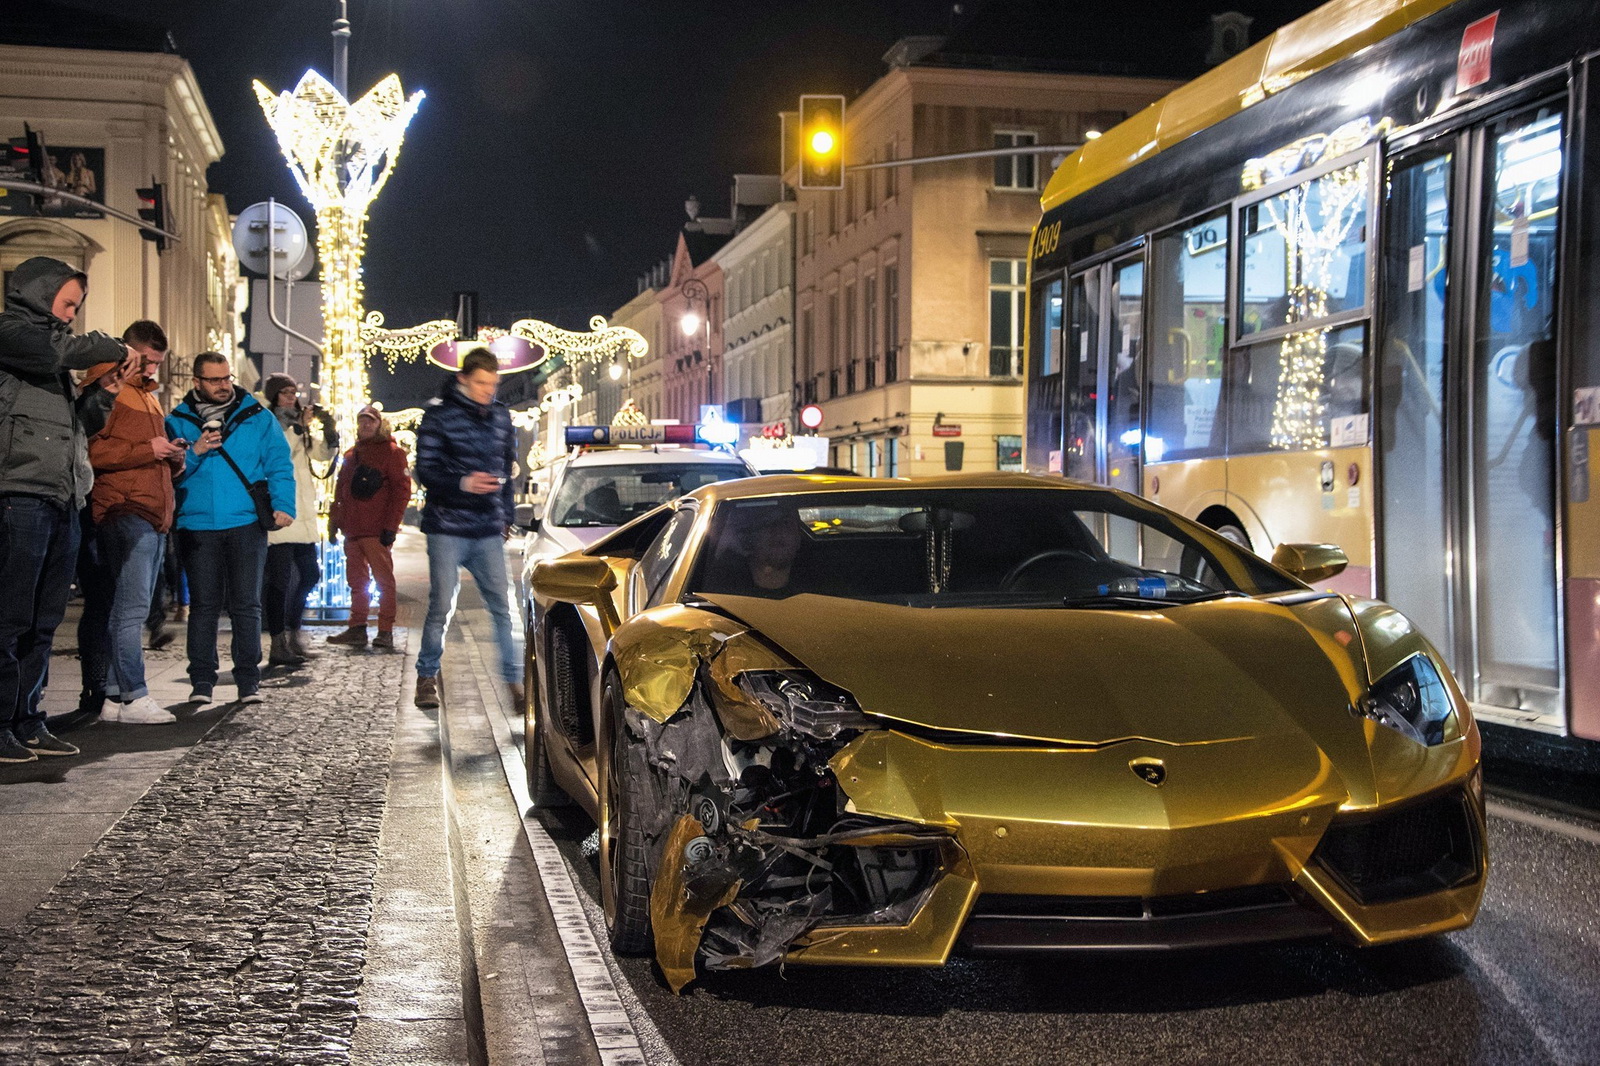 Gold Chrome Lamborghini Aventador Bites The Dust In Poland | Carscoops